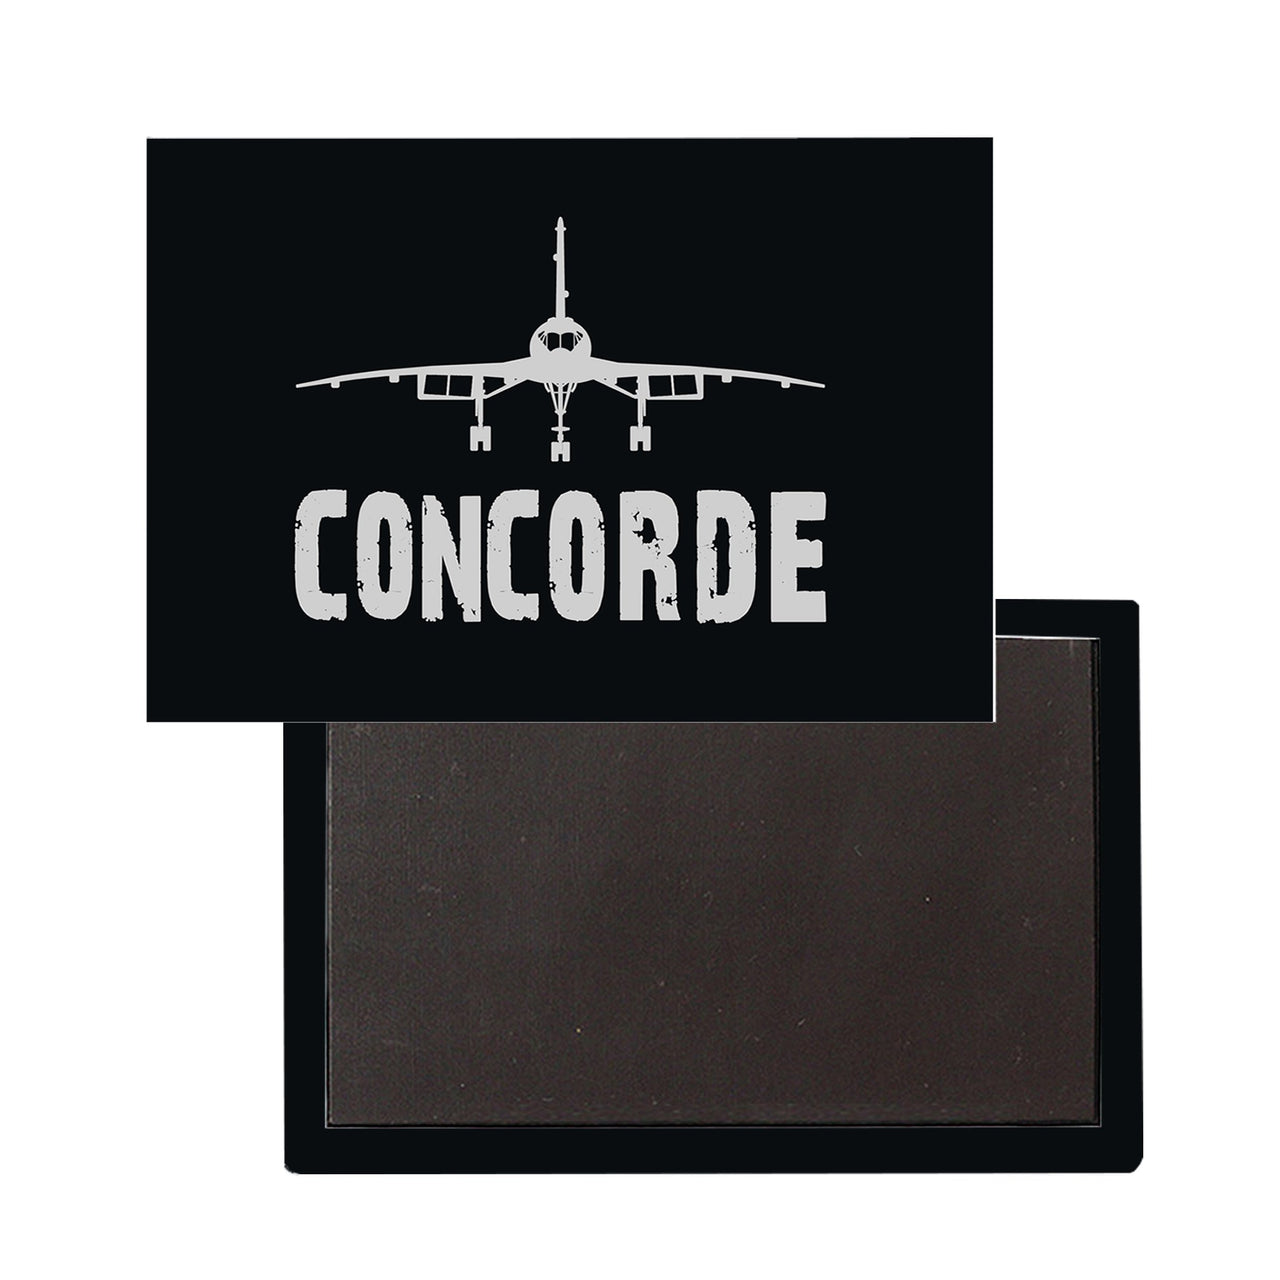 Concorde Plane & Designed Magnet Pilot Eyes Store 